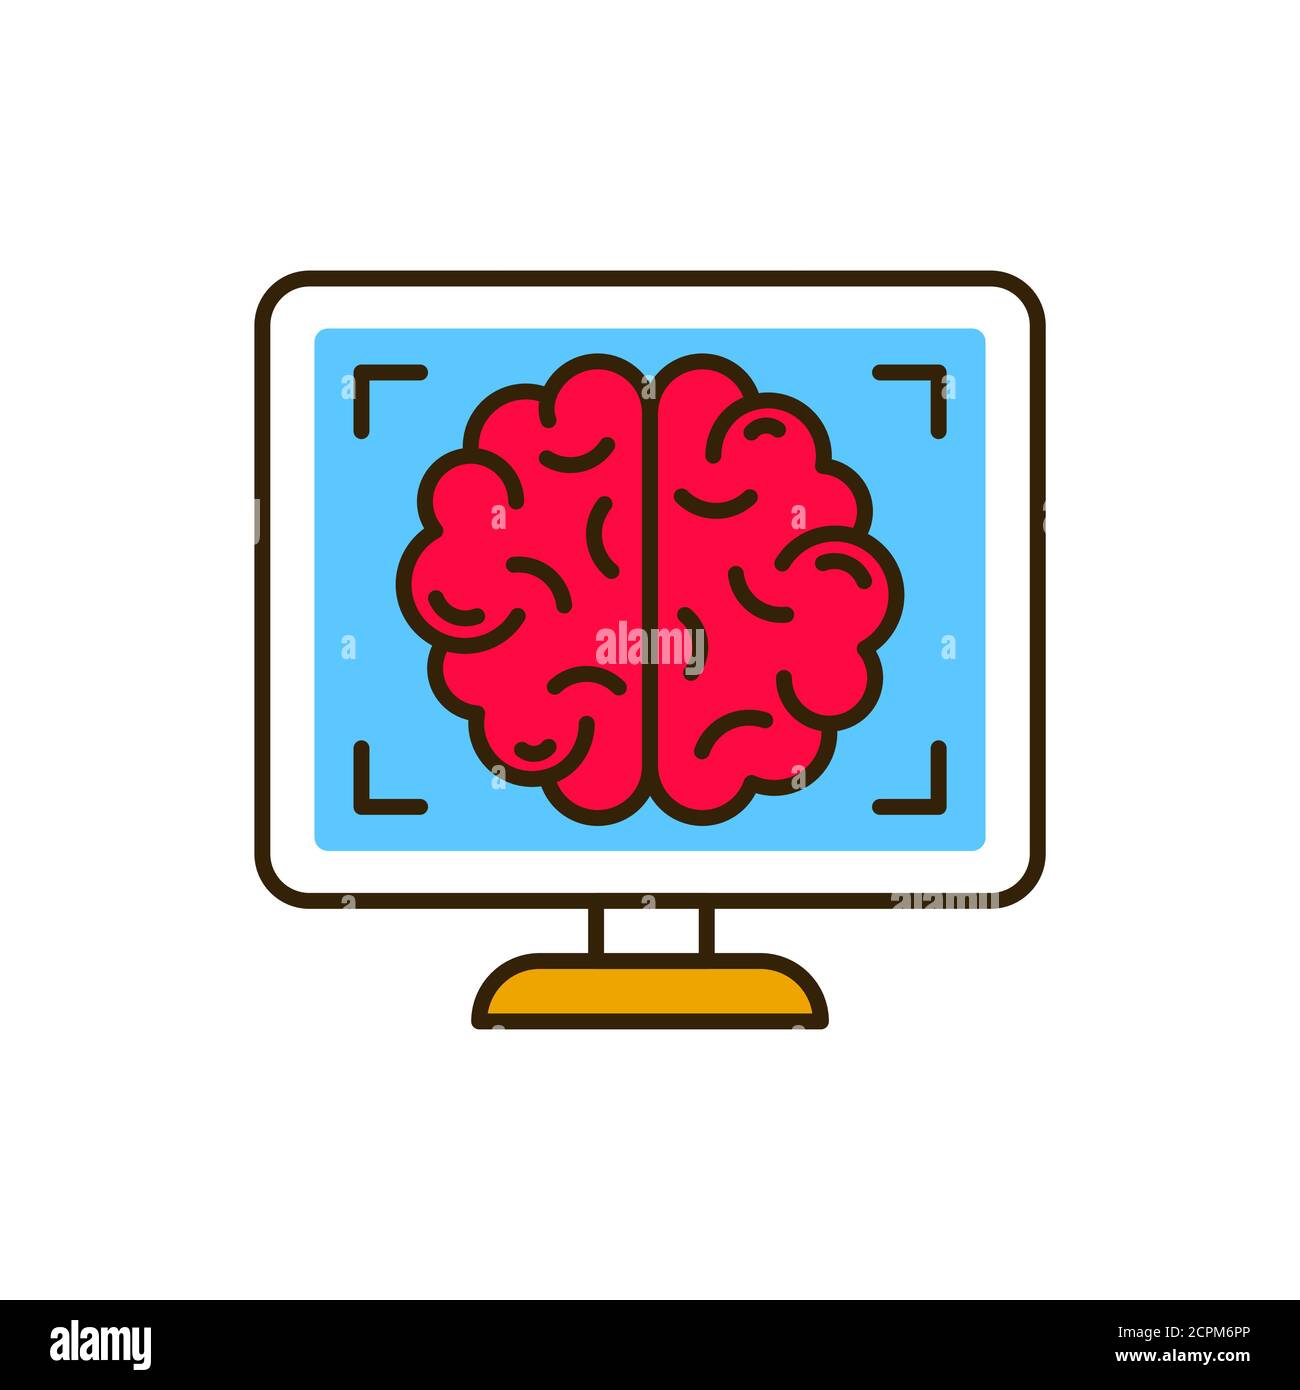 Mri brain color line icon. Medical and scientific concept. Laboratory diagnostics. Pictogram for web, mobile app, promo. UI UX design element Stock Vector